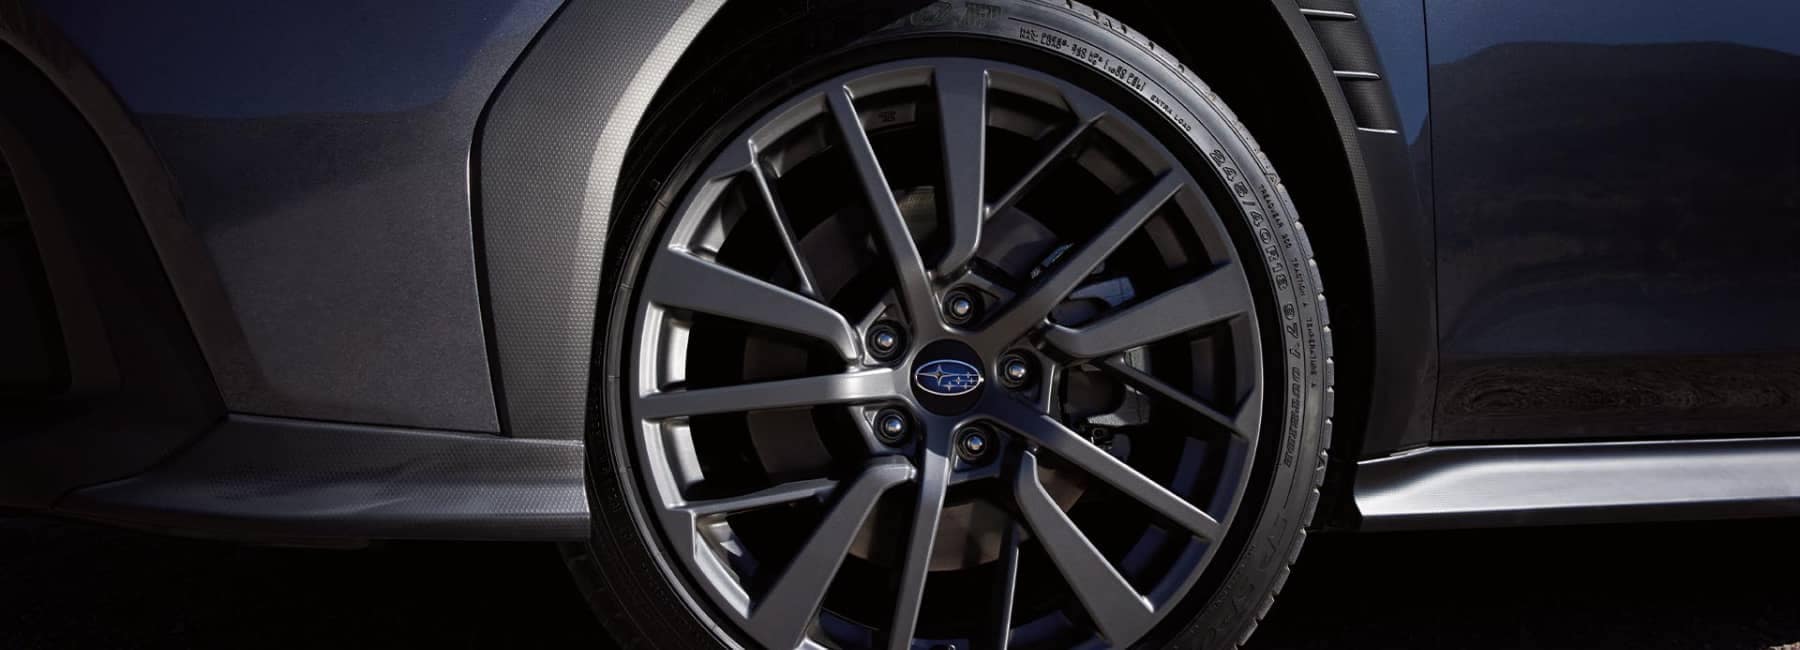 2022 Subaru WRX-closeup view on wheel-gray_mobile